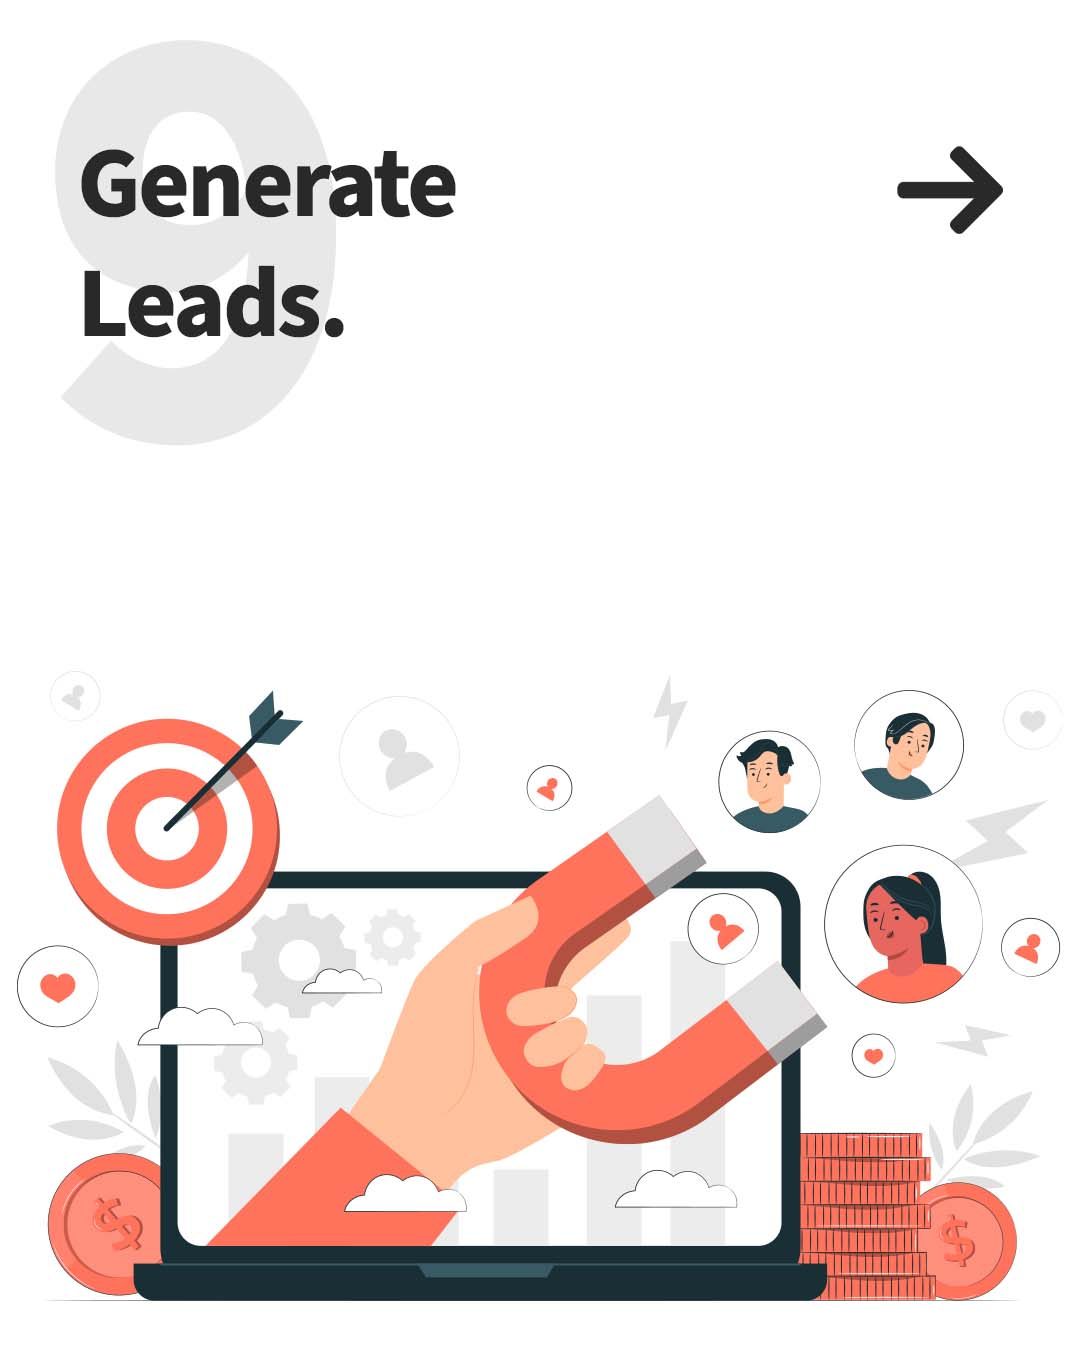 Generate leads